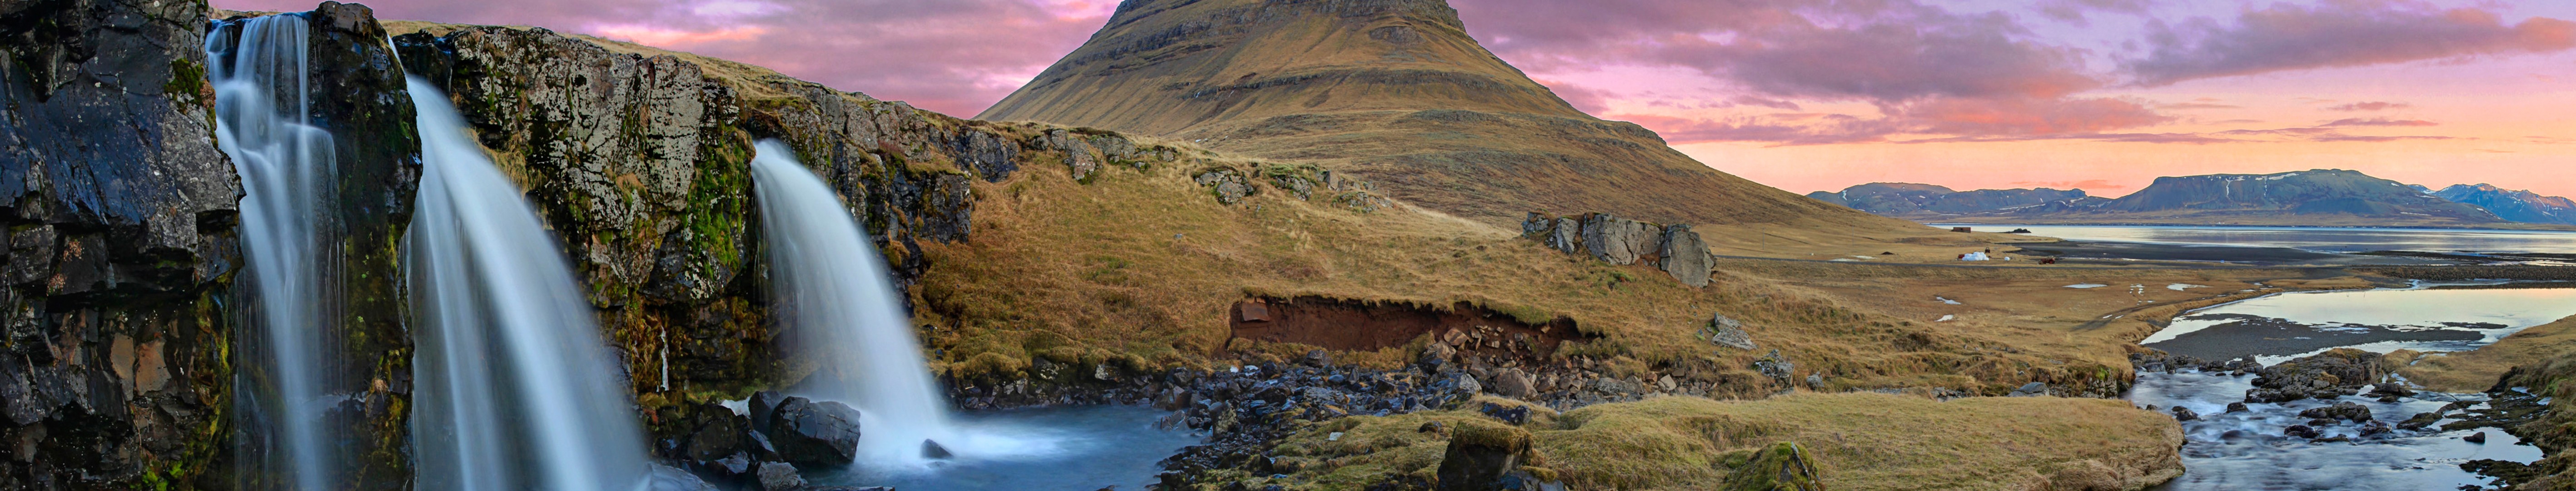 Iceland, Europe, Panorama, Waterfall, Hills, Mountains, Grass, Water, Rocks, Sky Wallpaper